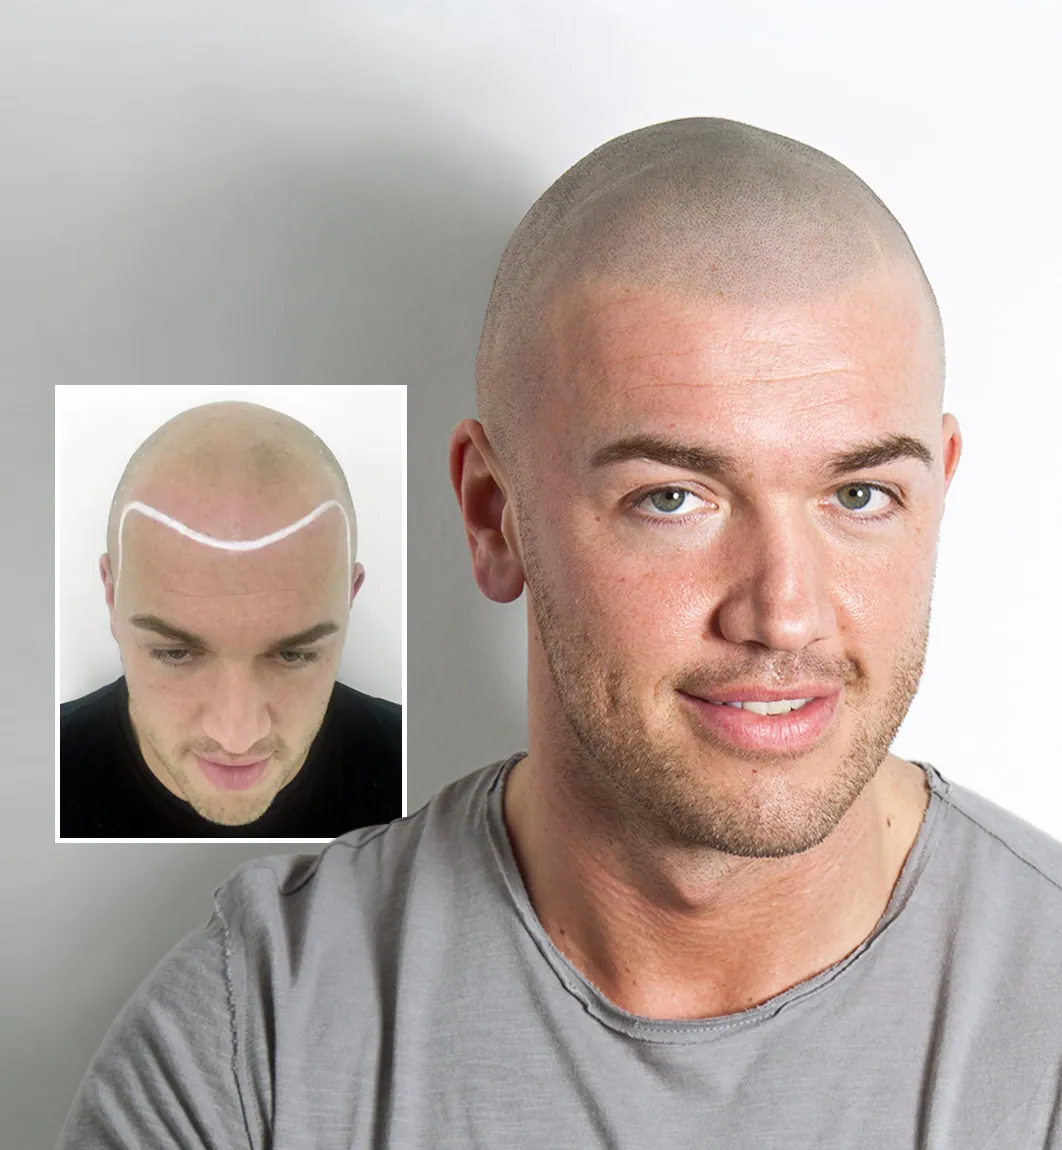 Bald man get... - Head'Lines Unisex Salon & Tattoo Studio | Facebook